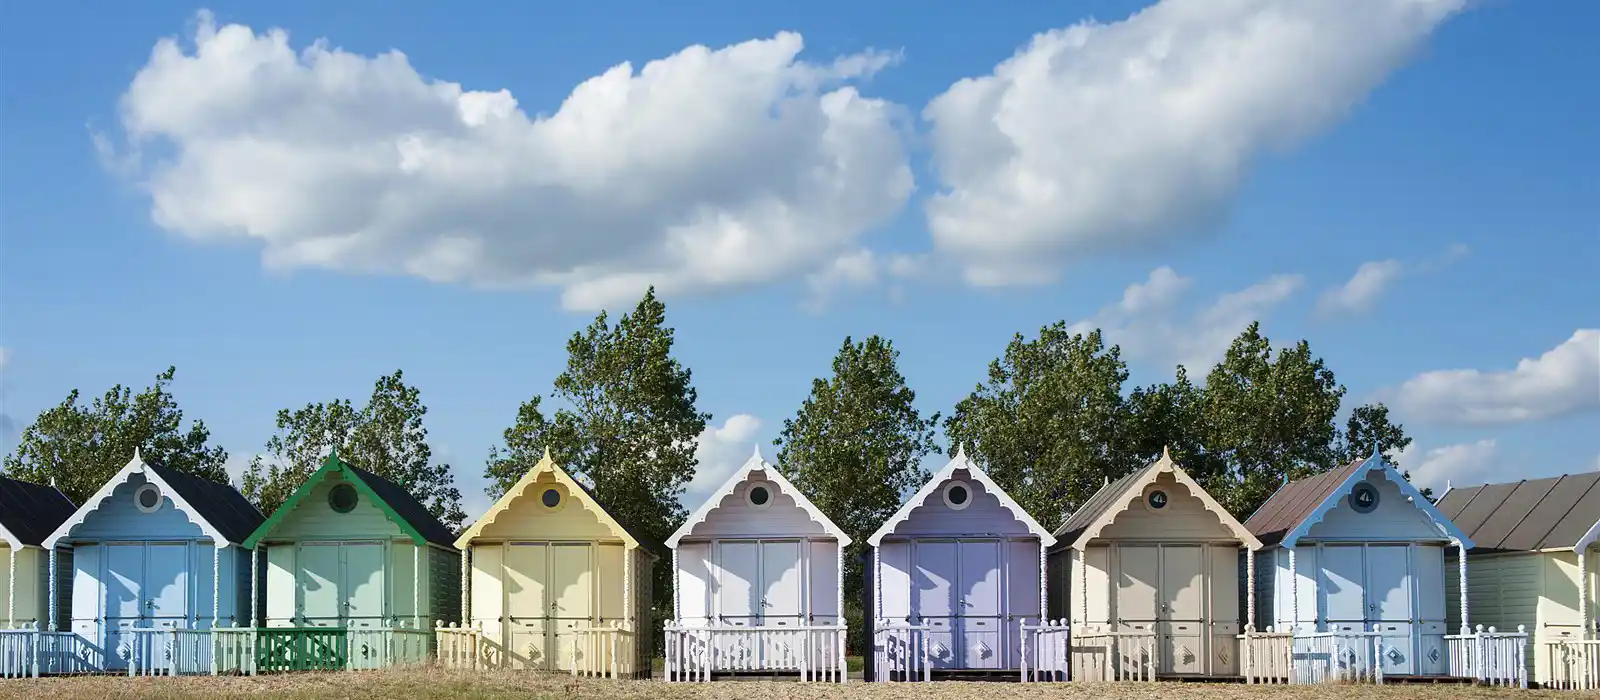 Beach huts on Mersea Island in Essex